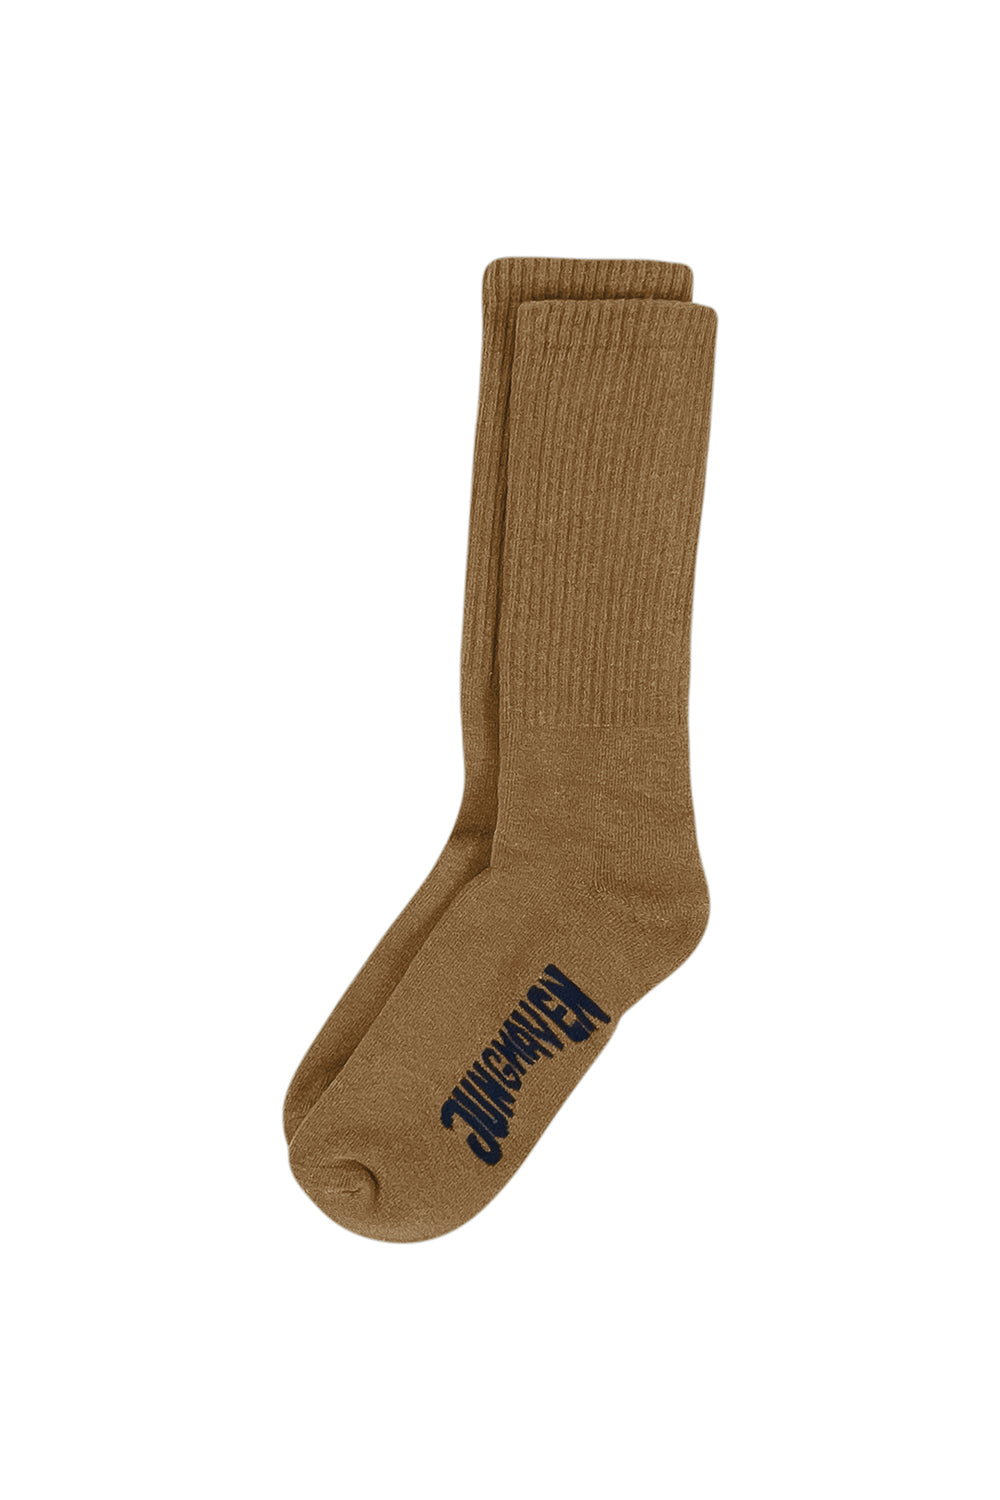 Hemp Wool Crew Socks | Jungmaven Hemp Clothing & Accessories / Color: Coyote